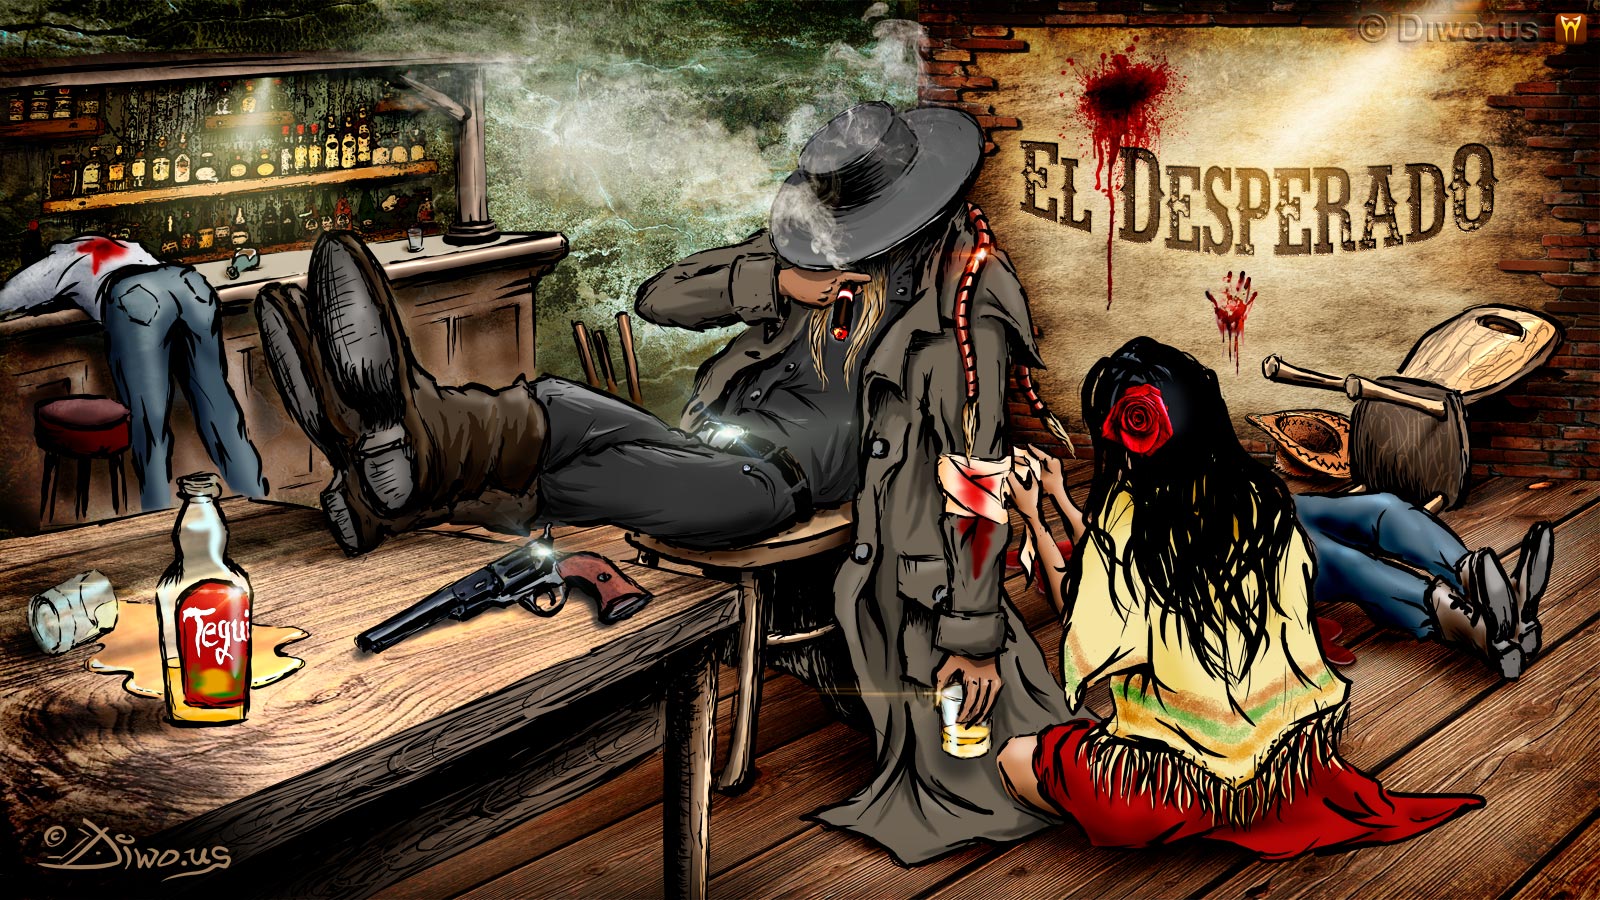 Diwous - El Desperado, #diwoselfie, photoillustration, digital illusionist, Art, drawing, cartoon, comics, collage, style, unique technique, Mexico, bar, salloon, colt, wooden floor, table, shooting, Tequila, mexican girl, poncho, cowboy, cigar, caballero hat, rider, desperát, mexičanka, hospoda, střelba, klobouk, rvačka, doutník, kráska